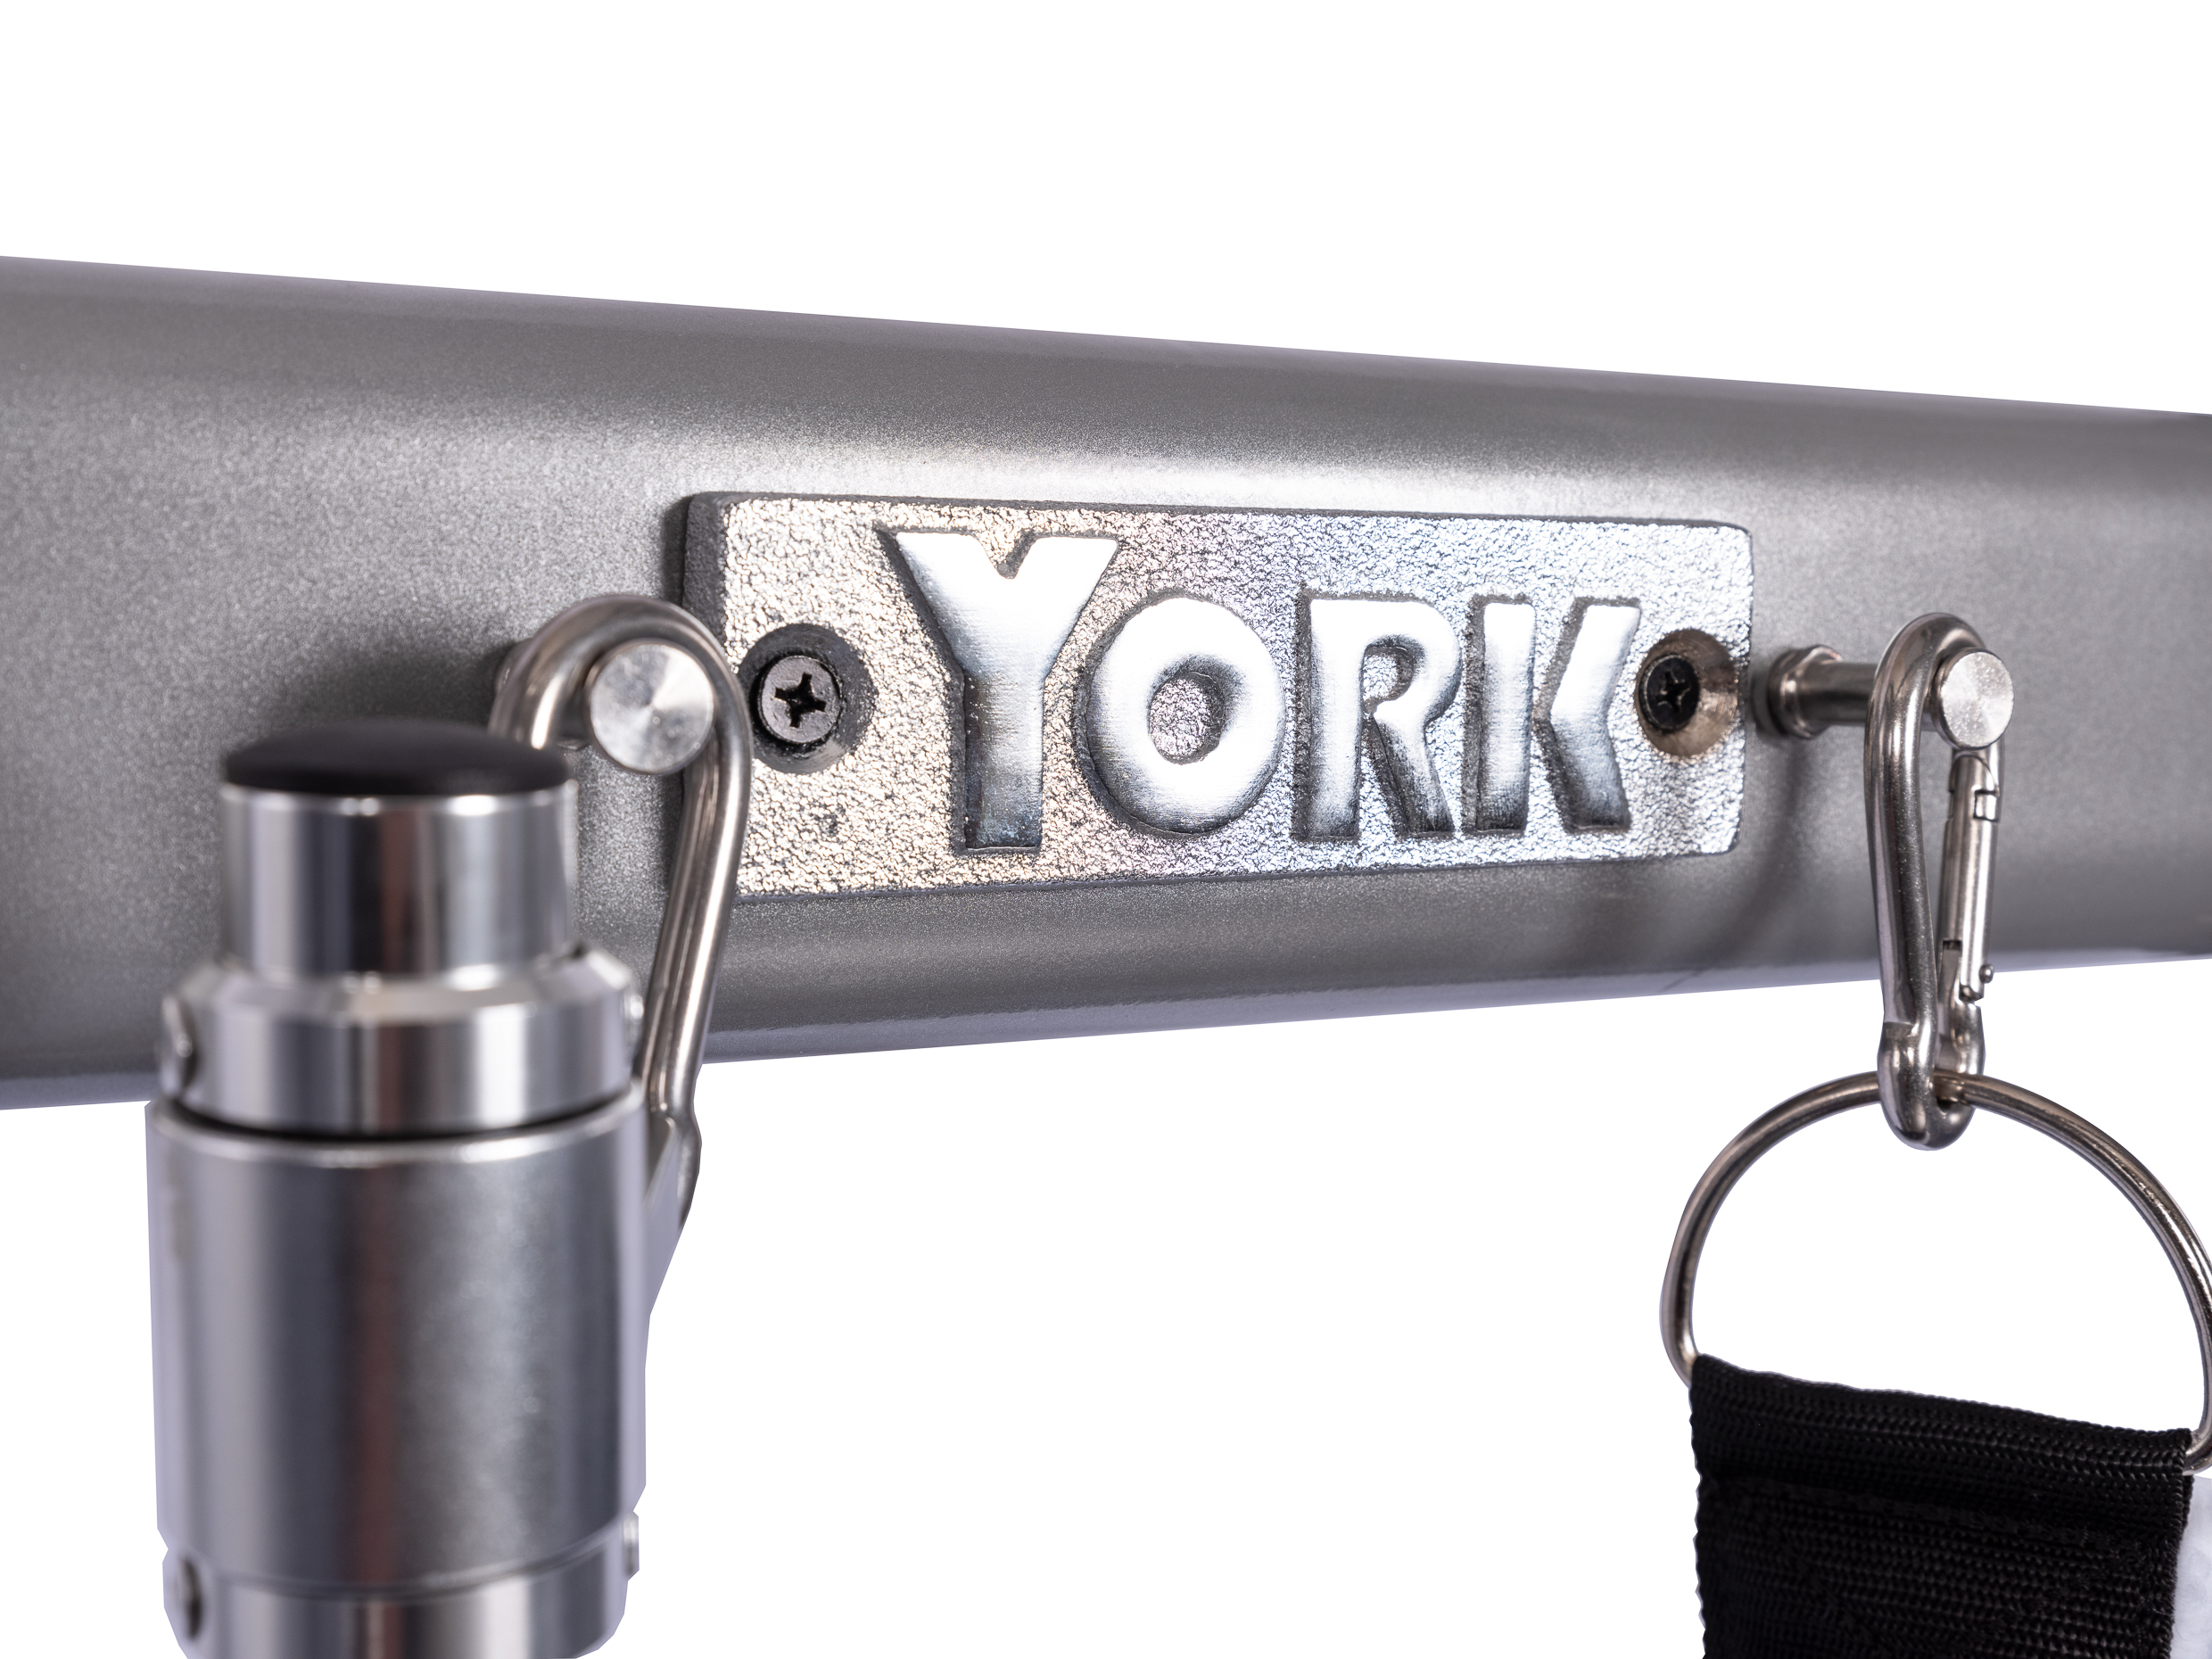 York Lifting Straps - York Barbell